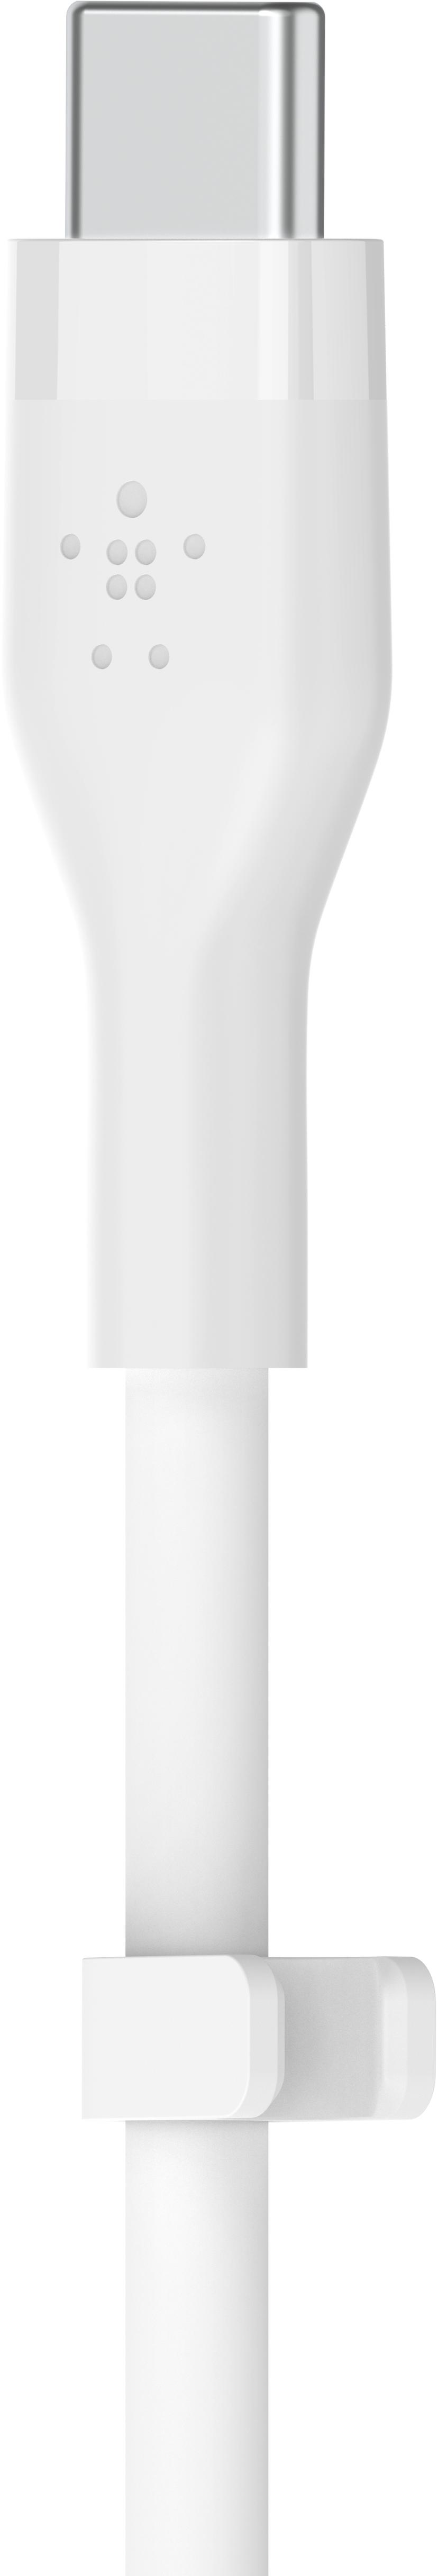 Belkin Flex USB-C to USB-C Cabel Silicone (2-pack) 1m USB C USB C Musta, Valkoinen